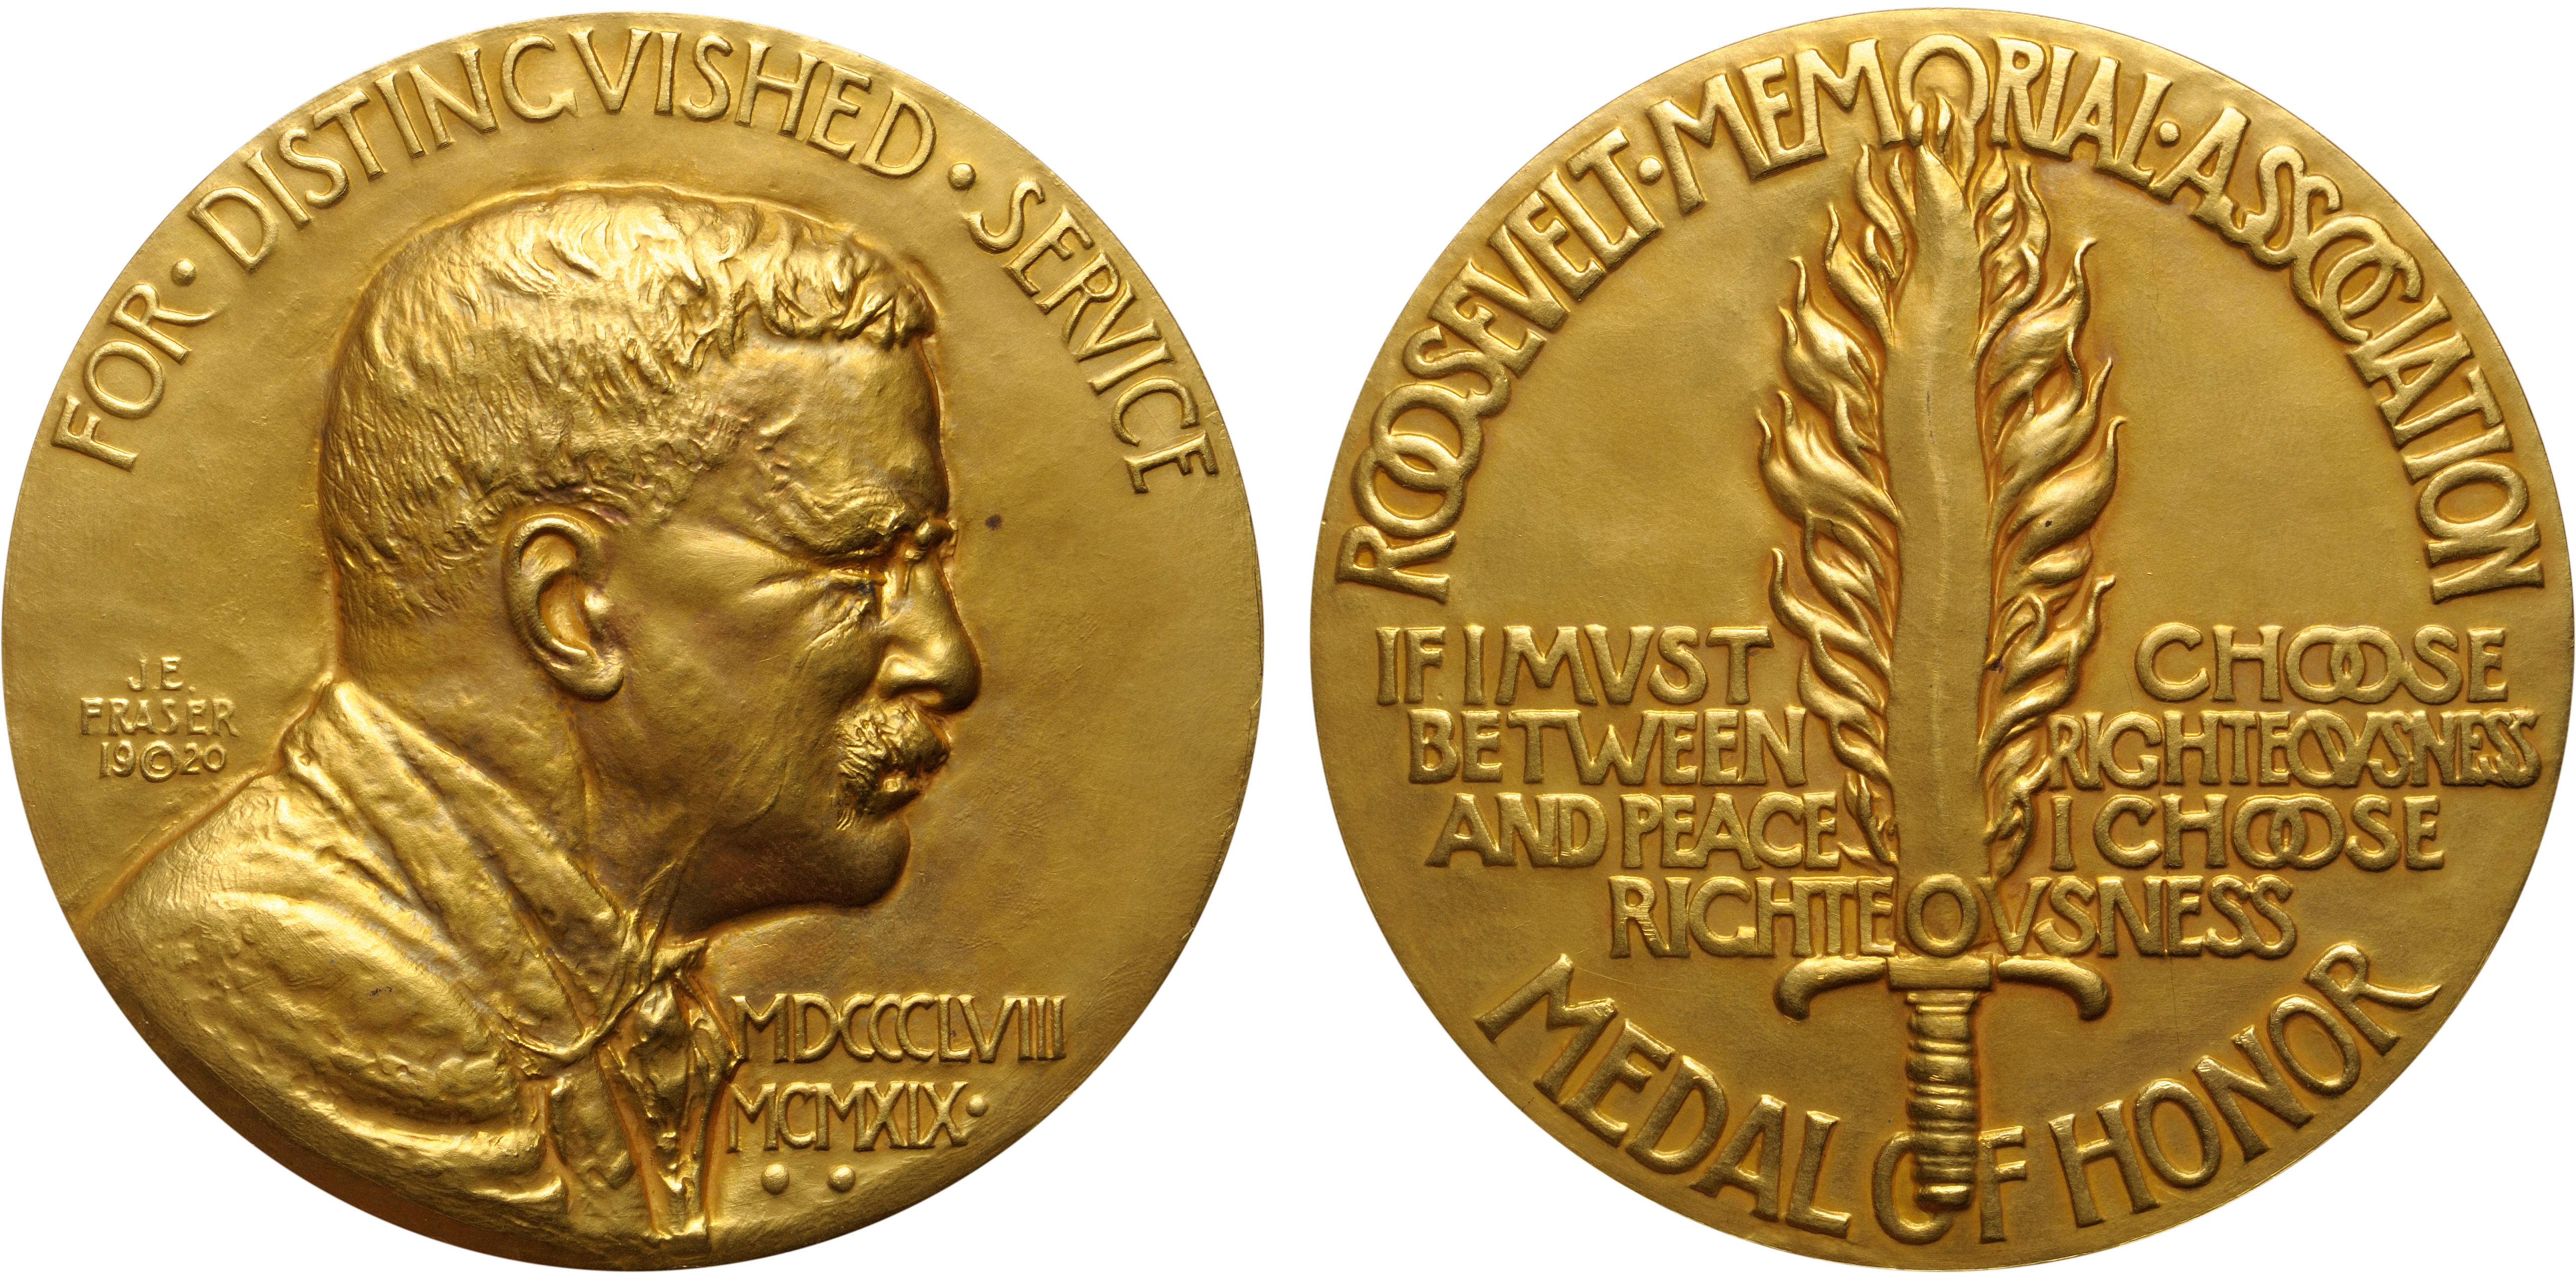 Gold Roosevelt Memorial Association Medal of Honor Presented to Hamlin Garland